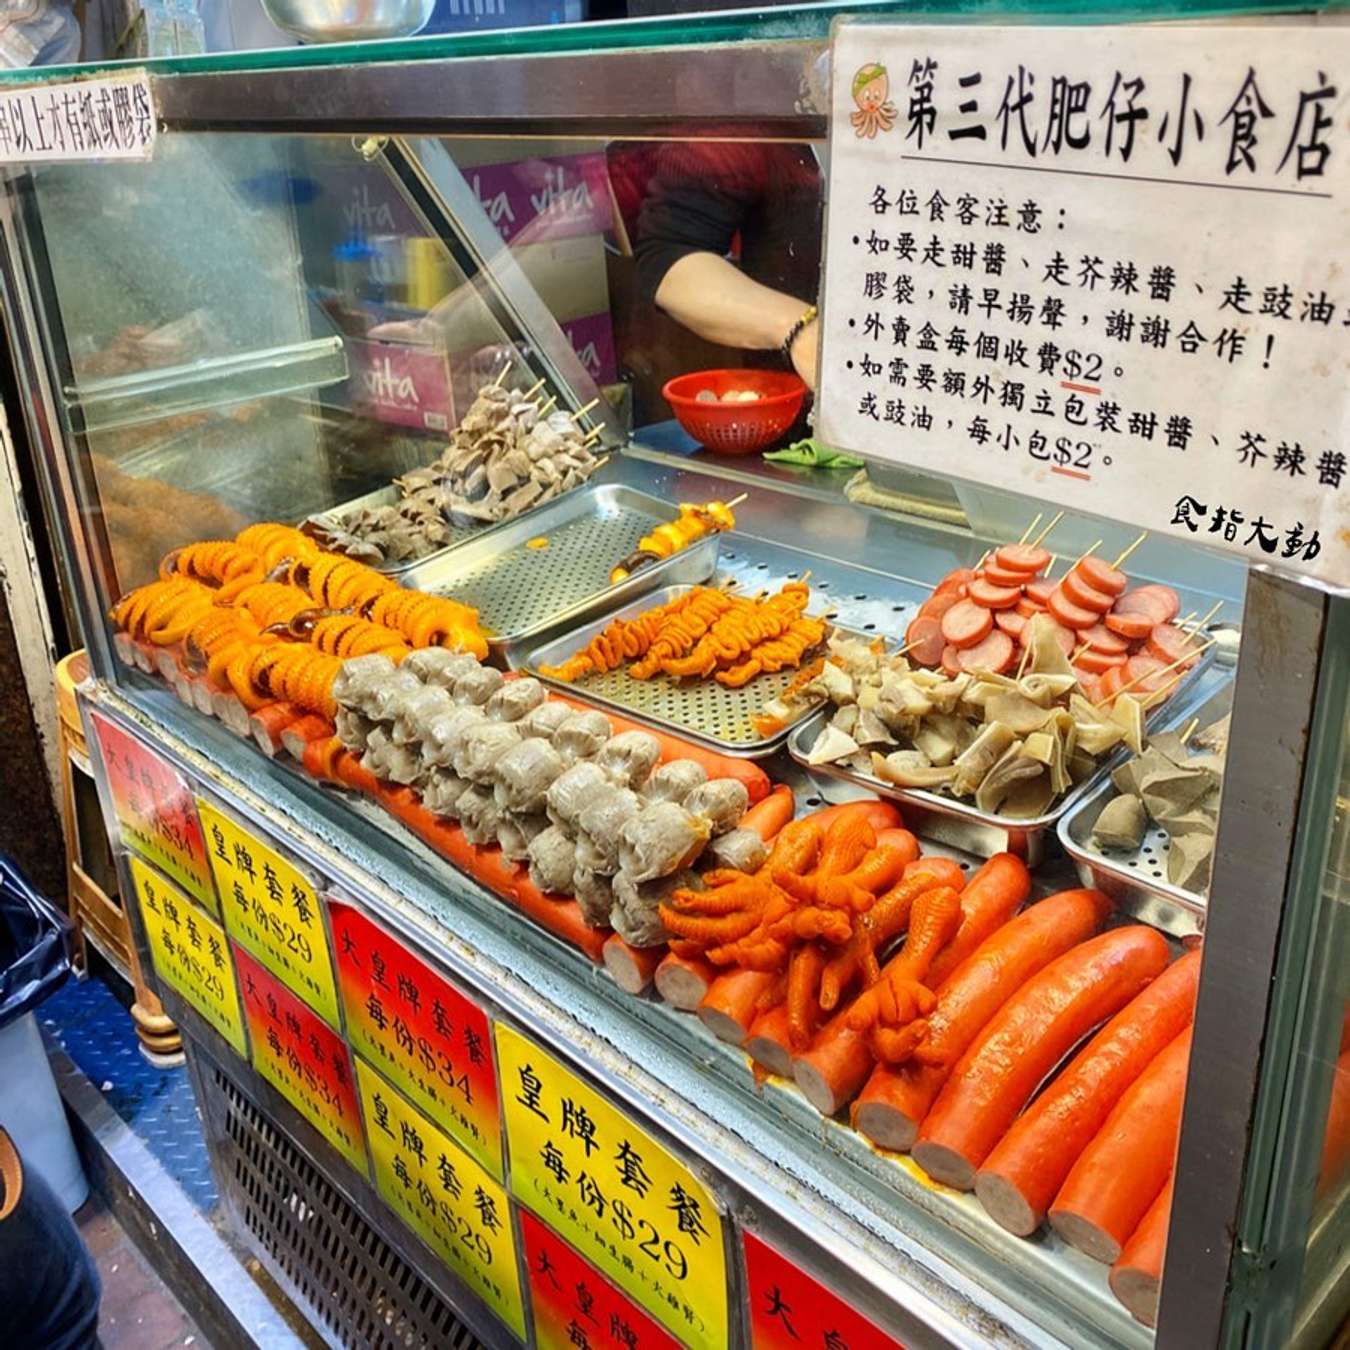 Fat Boy - Best Food in Hong Kong